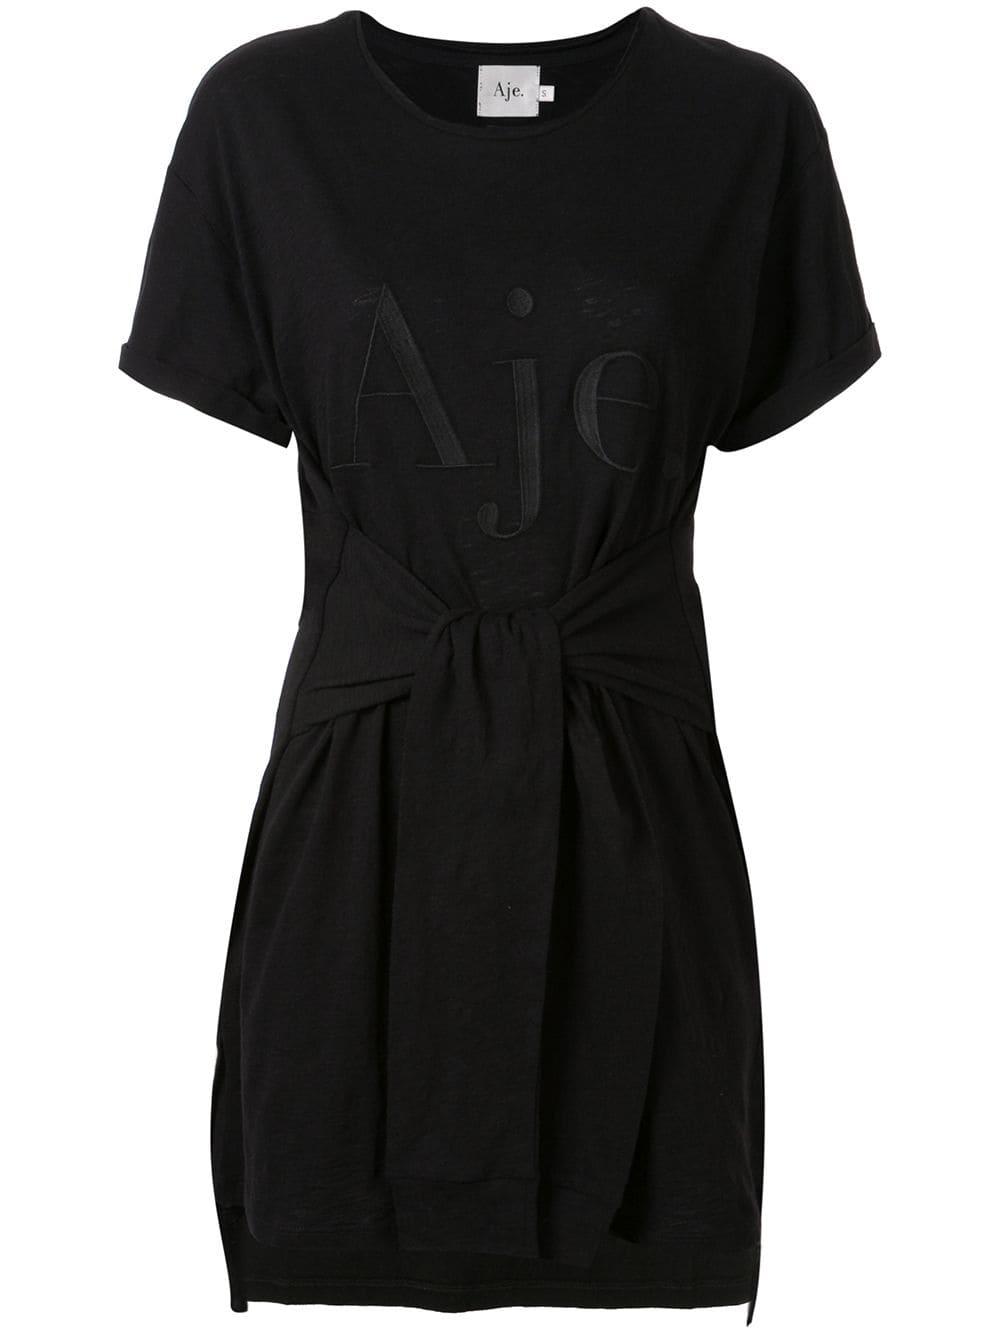 Aje. Cotton Logo Print T-shirt Dress in Black - Lyst